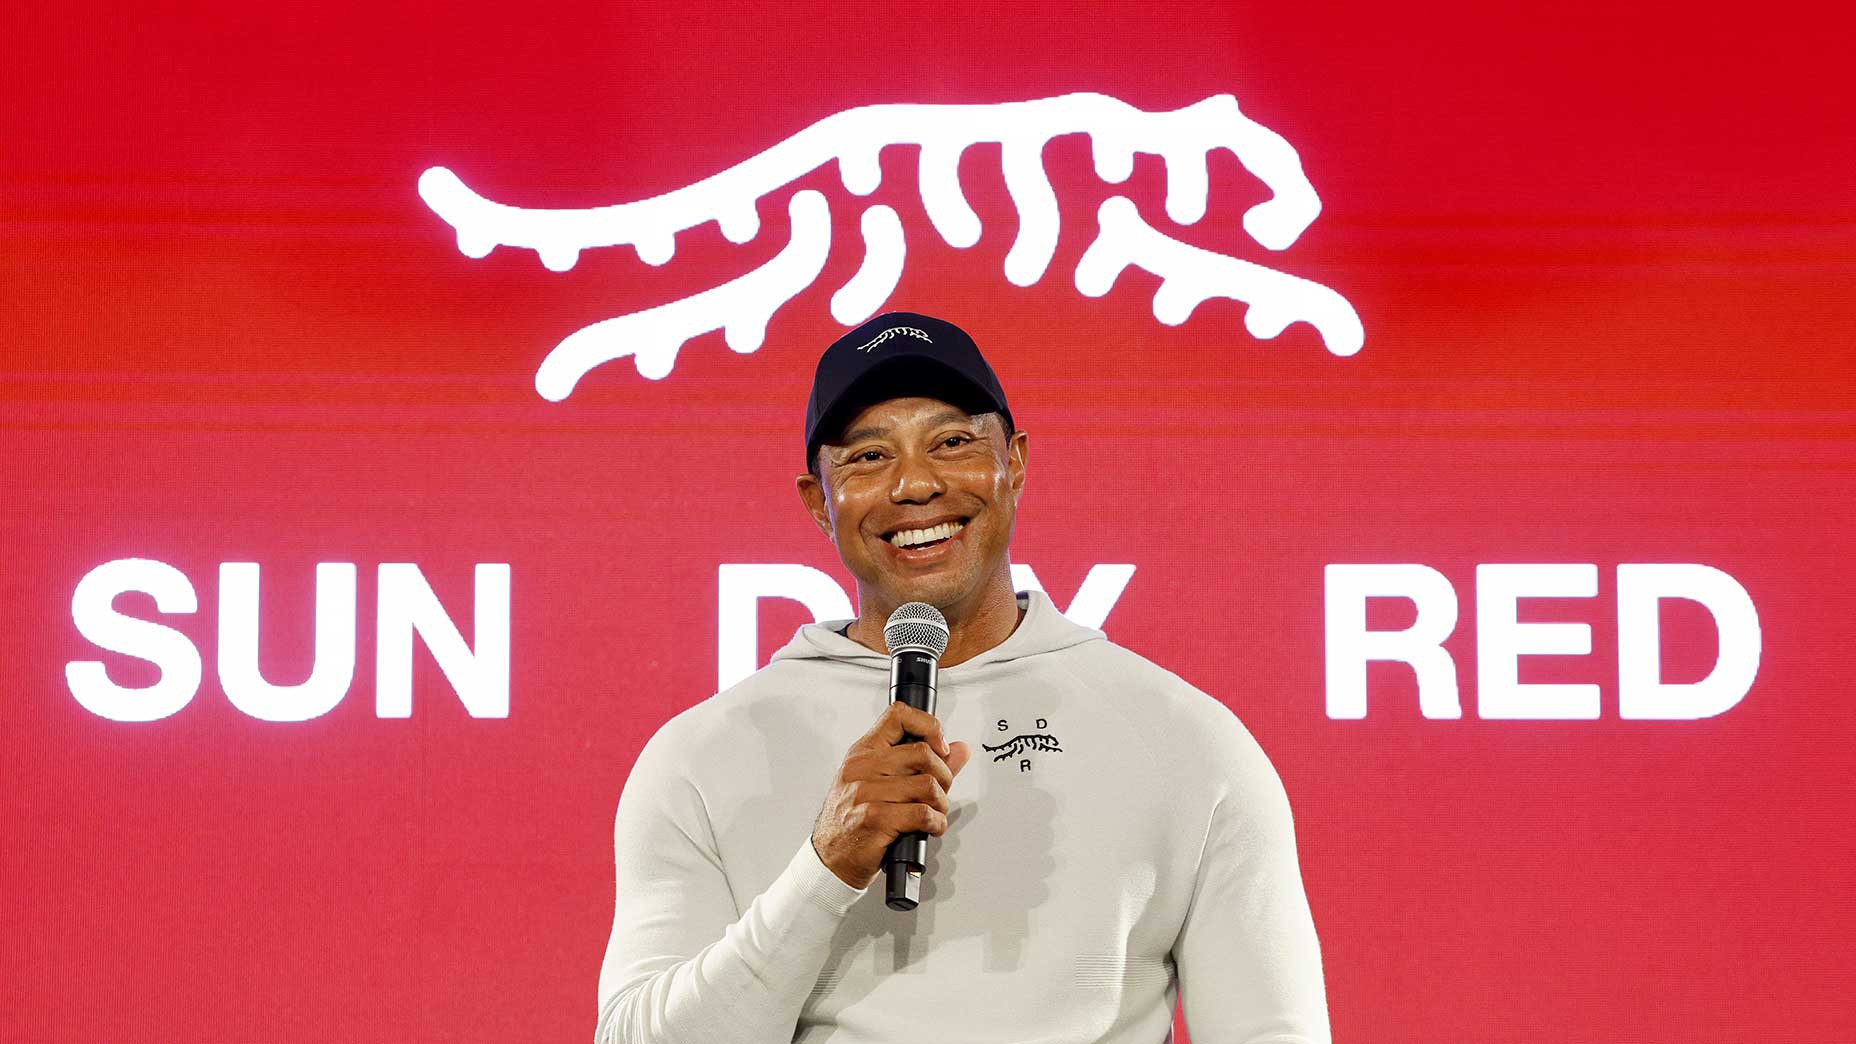 Tiger Woods unveils new logo, apparel brand ahead of PGA Tour return